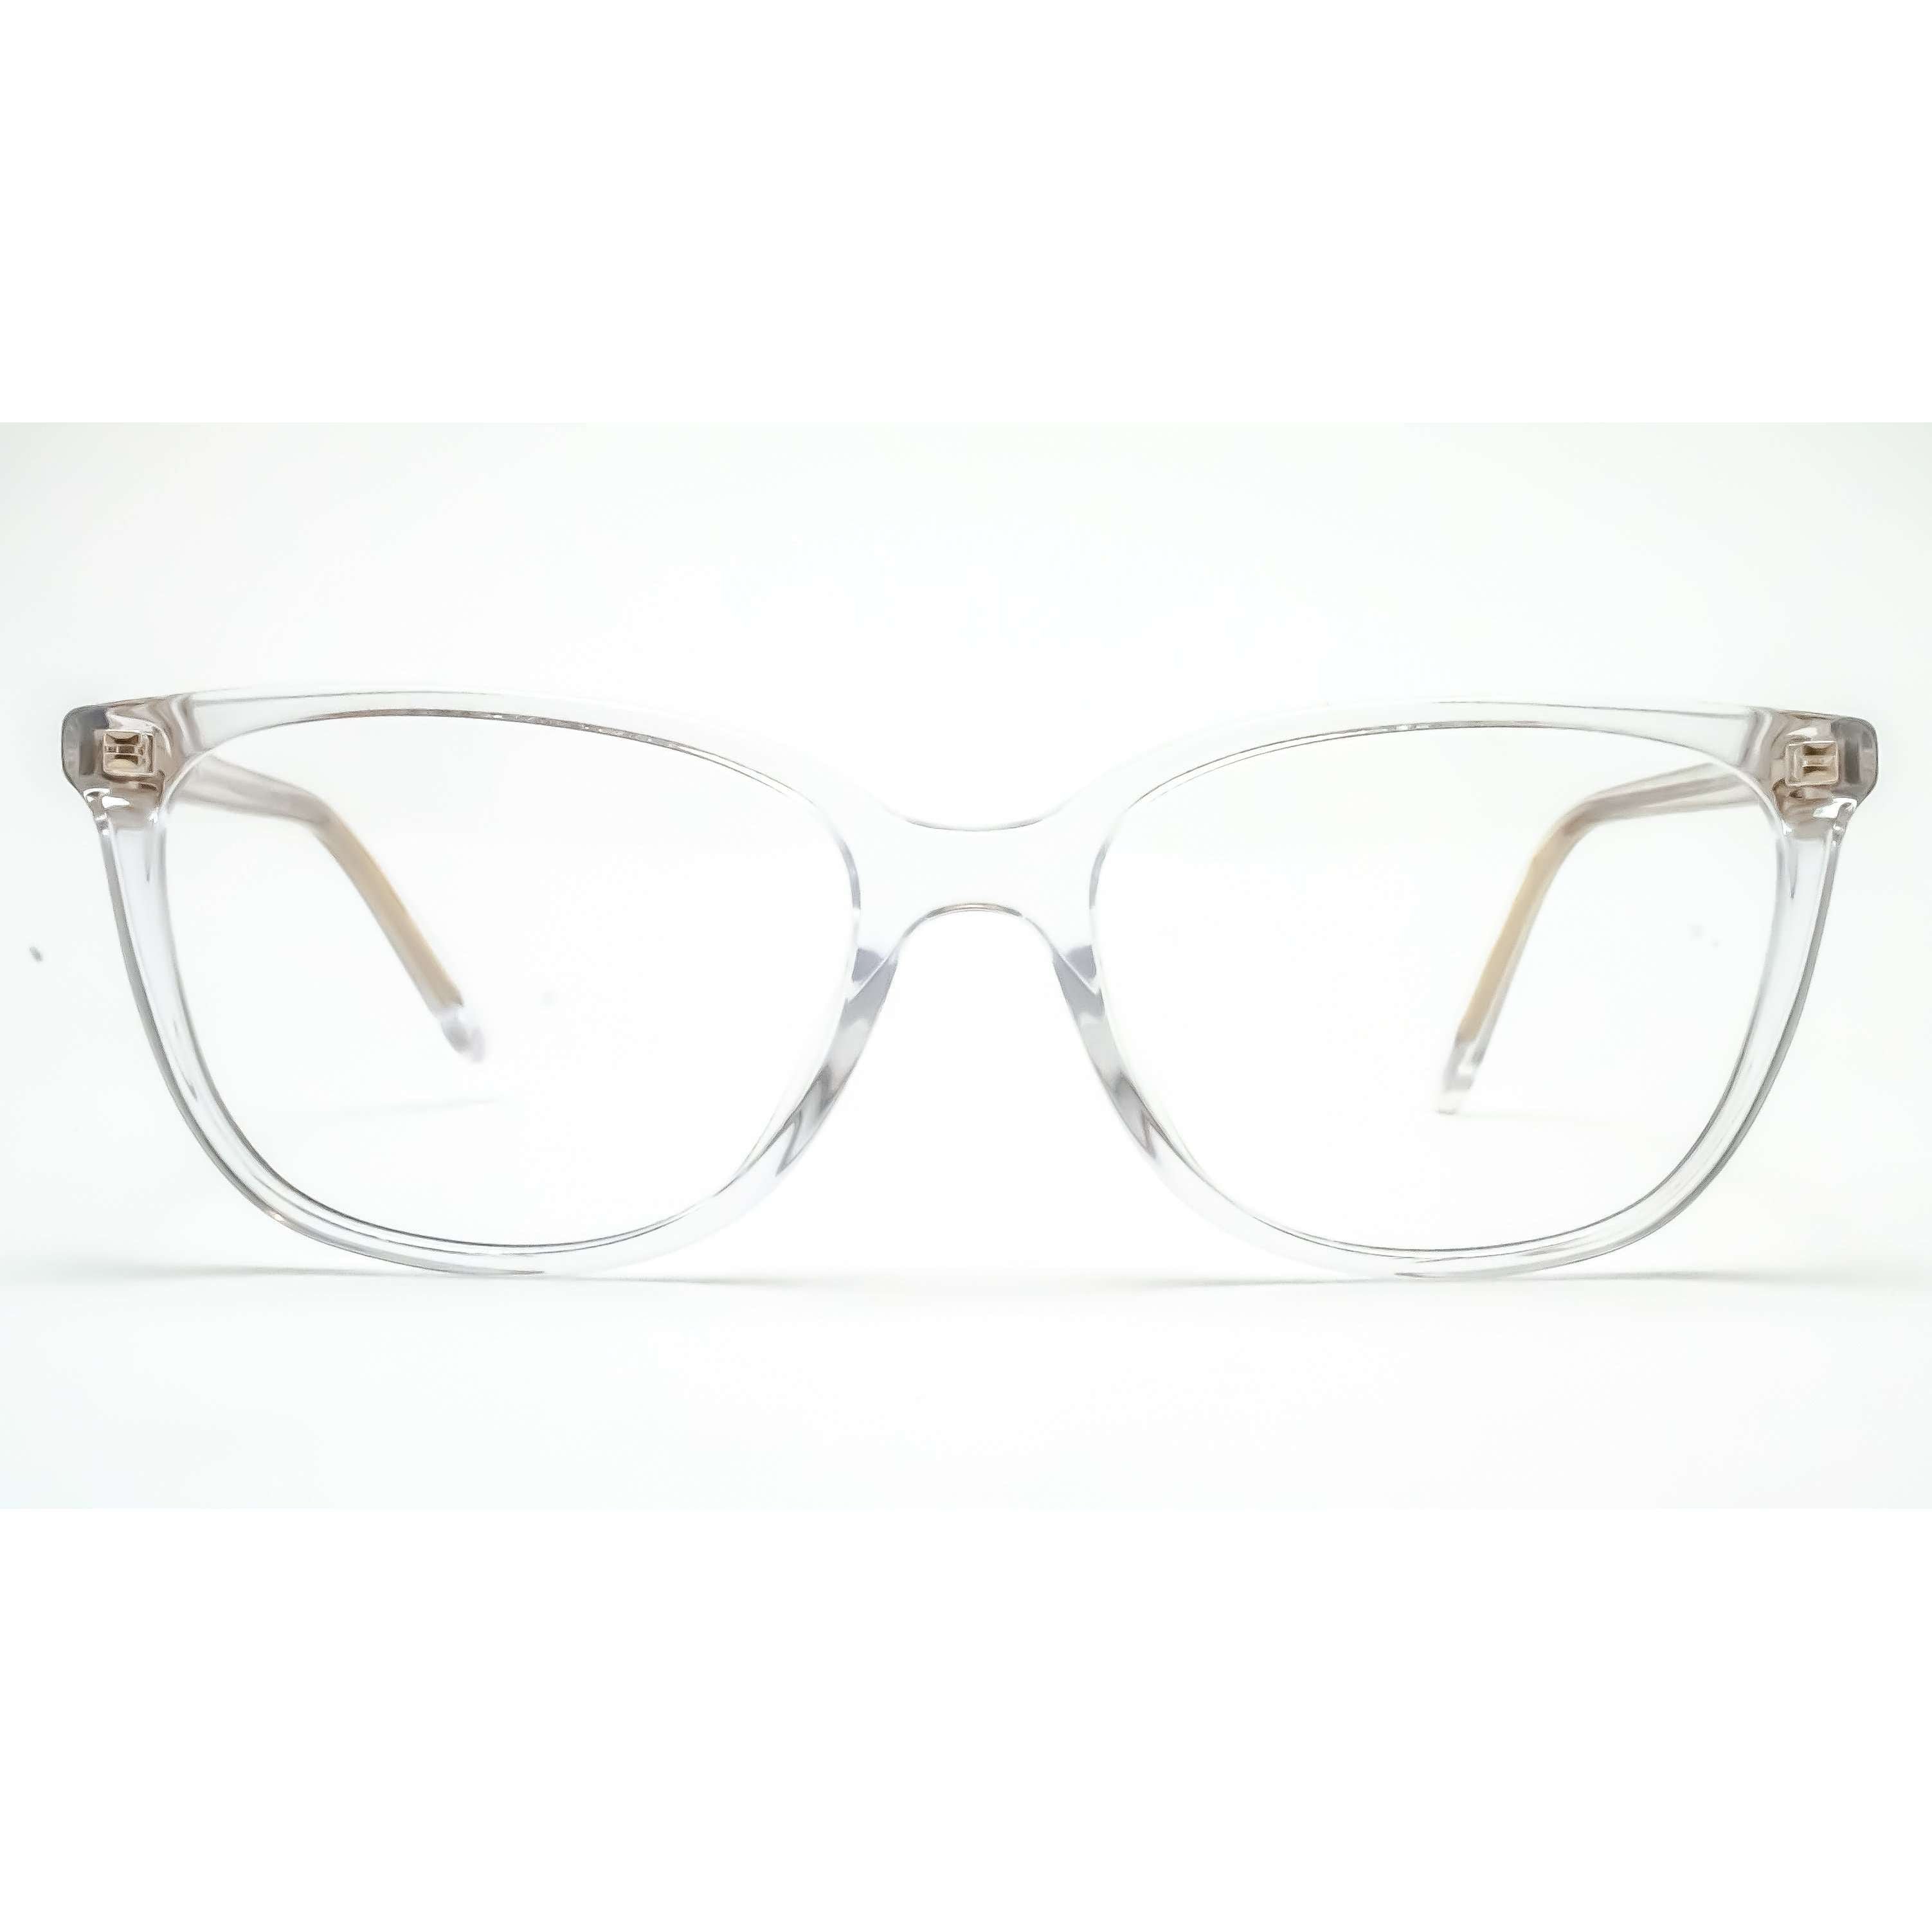 Michael Kors MK 40743050 Eyeglasses Tranparent Clear wDemo Lens 51mm   Clothing Shoes  Jewelry  Amazoncom